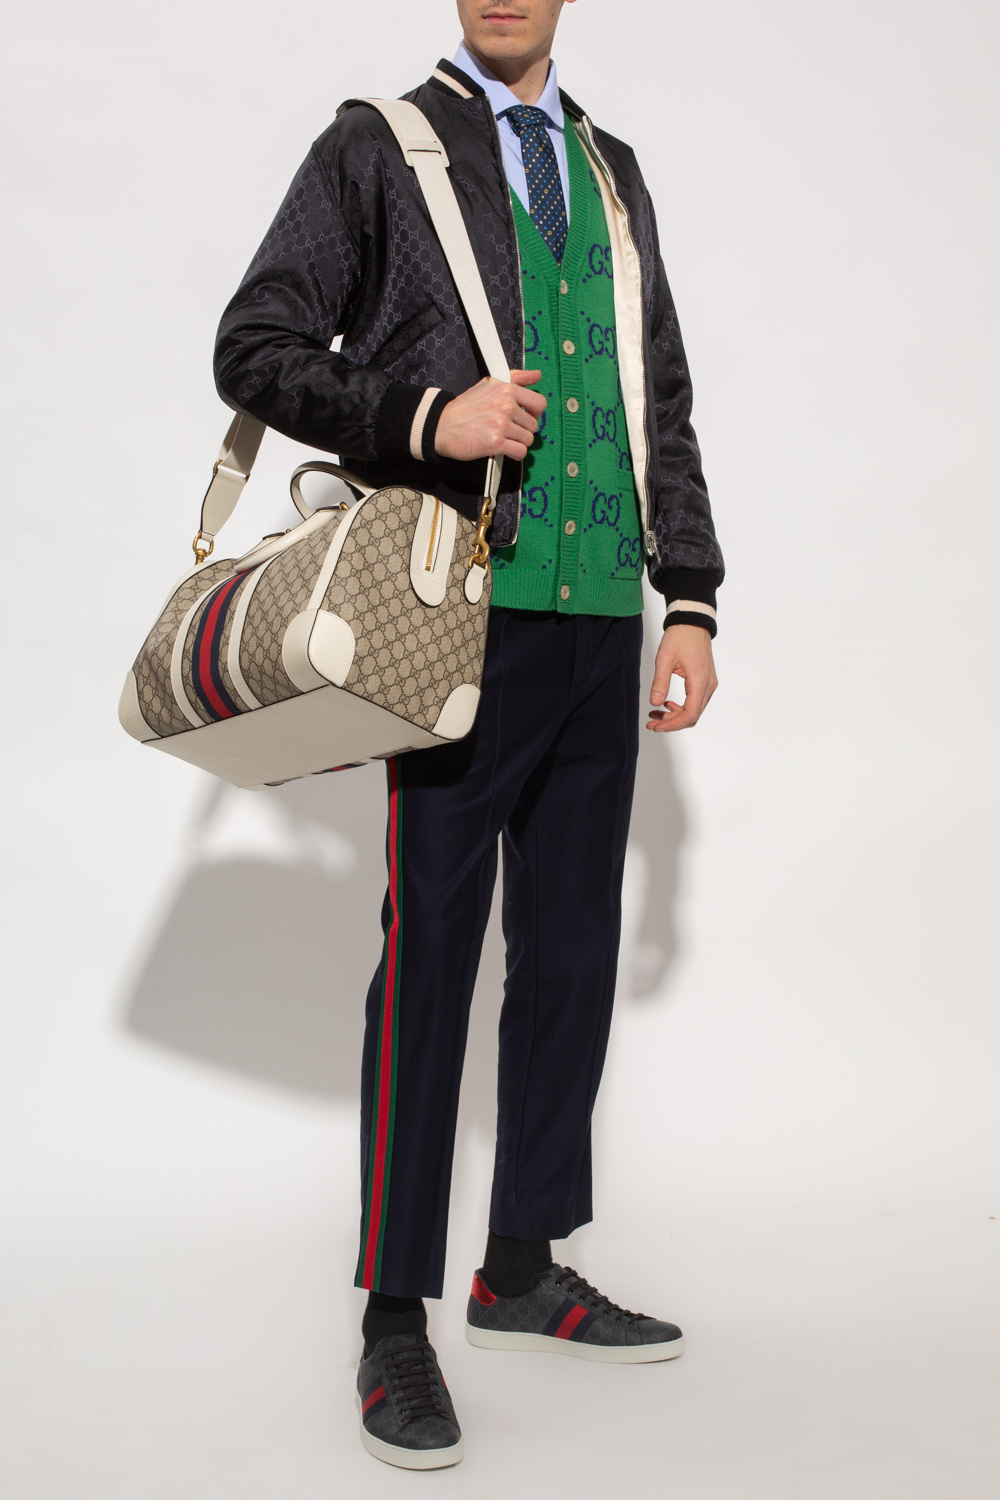 kylie jenner wine gucci sneakers bodysuit - IetpShops Belgium - Green  Cardigan with 'GG' monogram Gucci